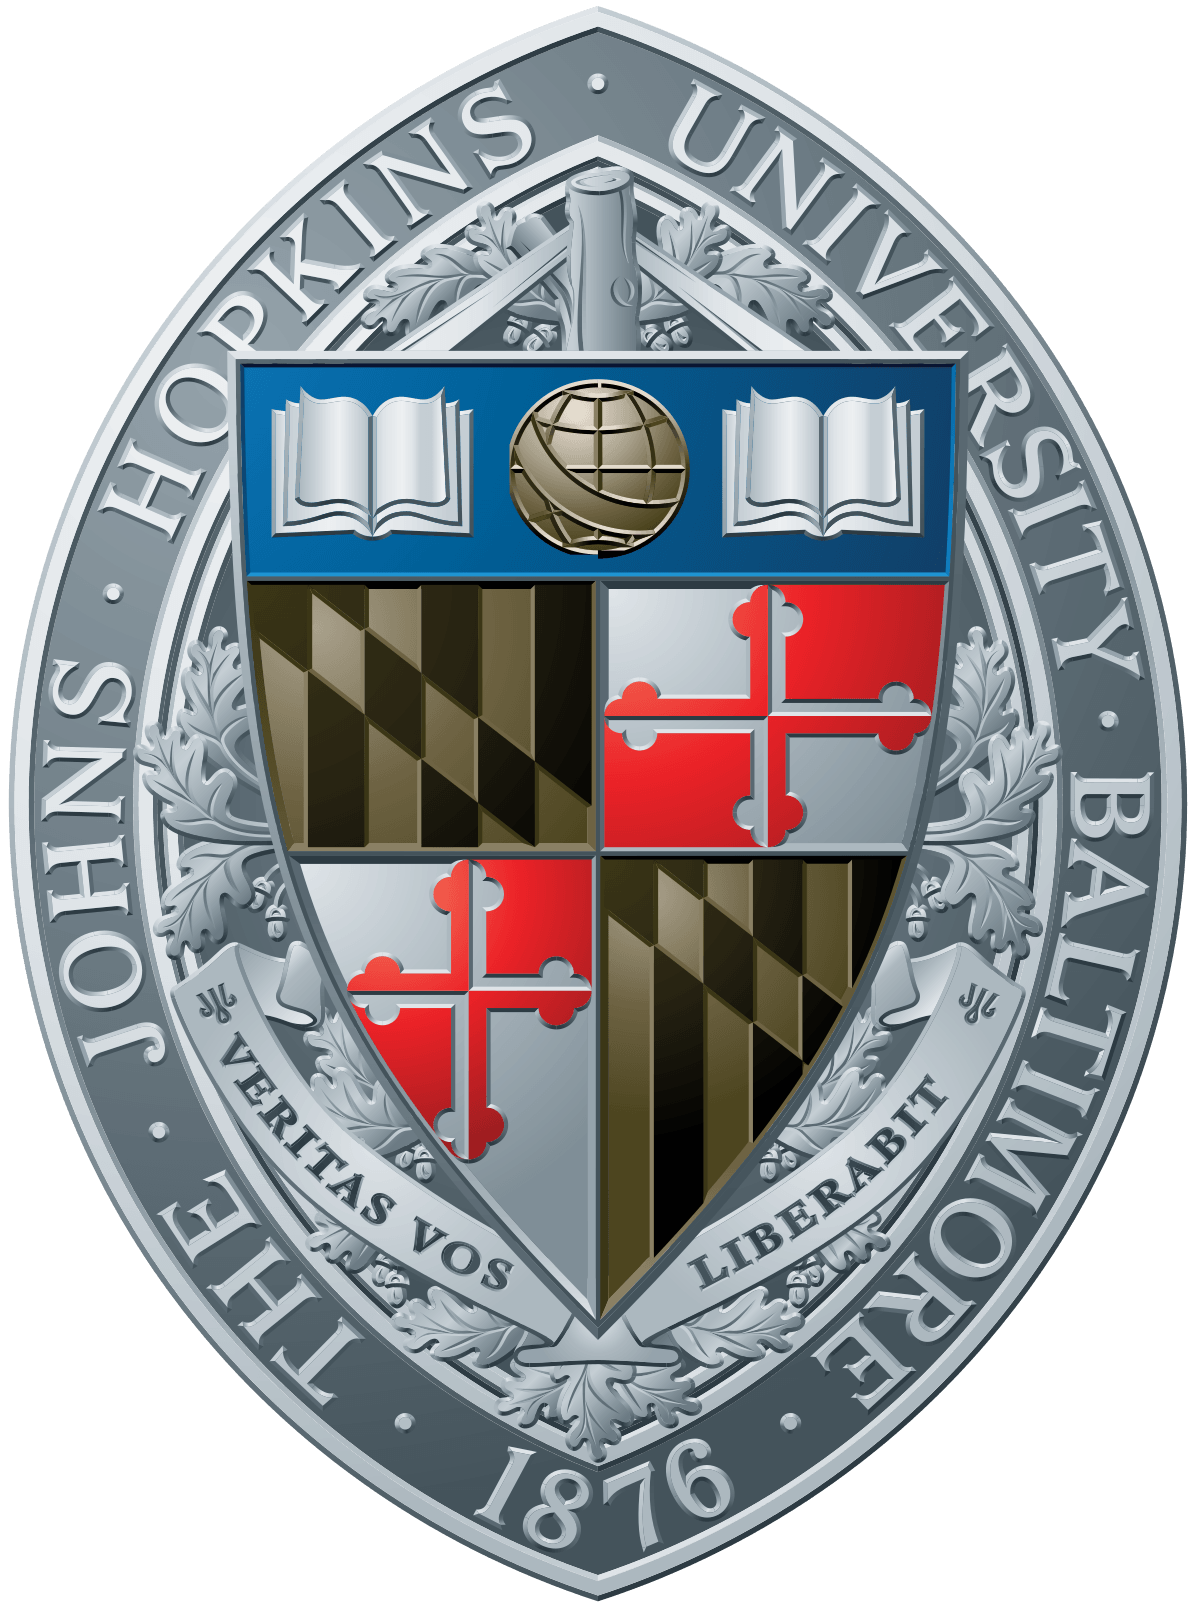 JHU Logo - Johns Hopkins University